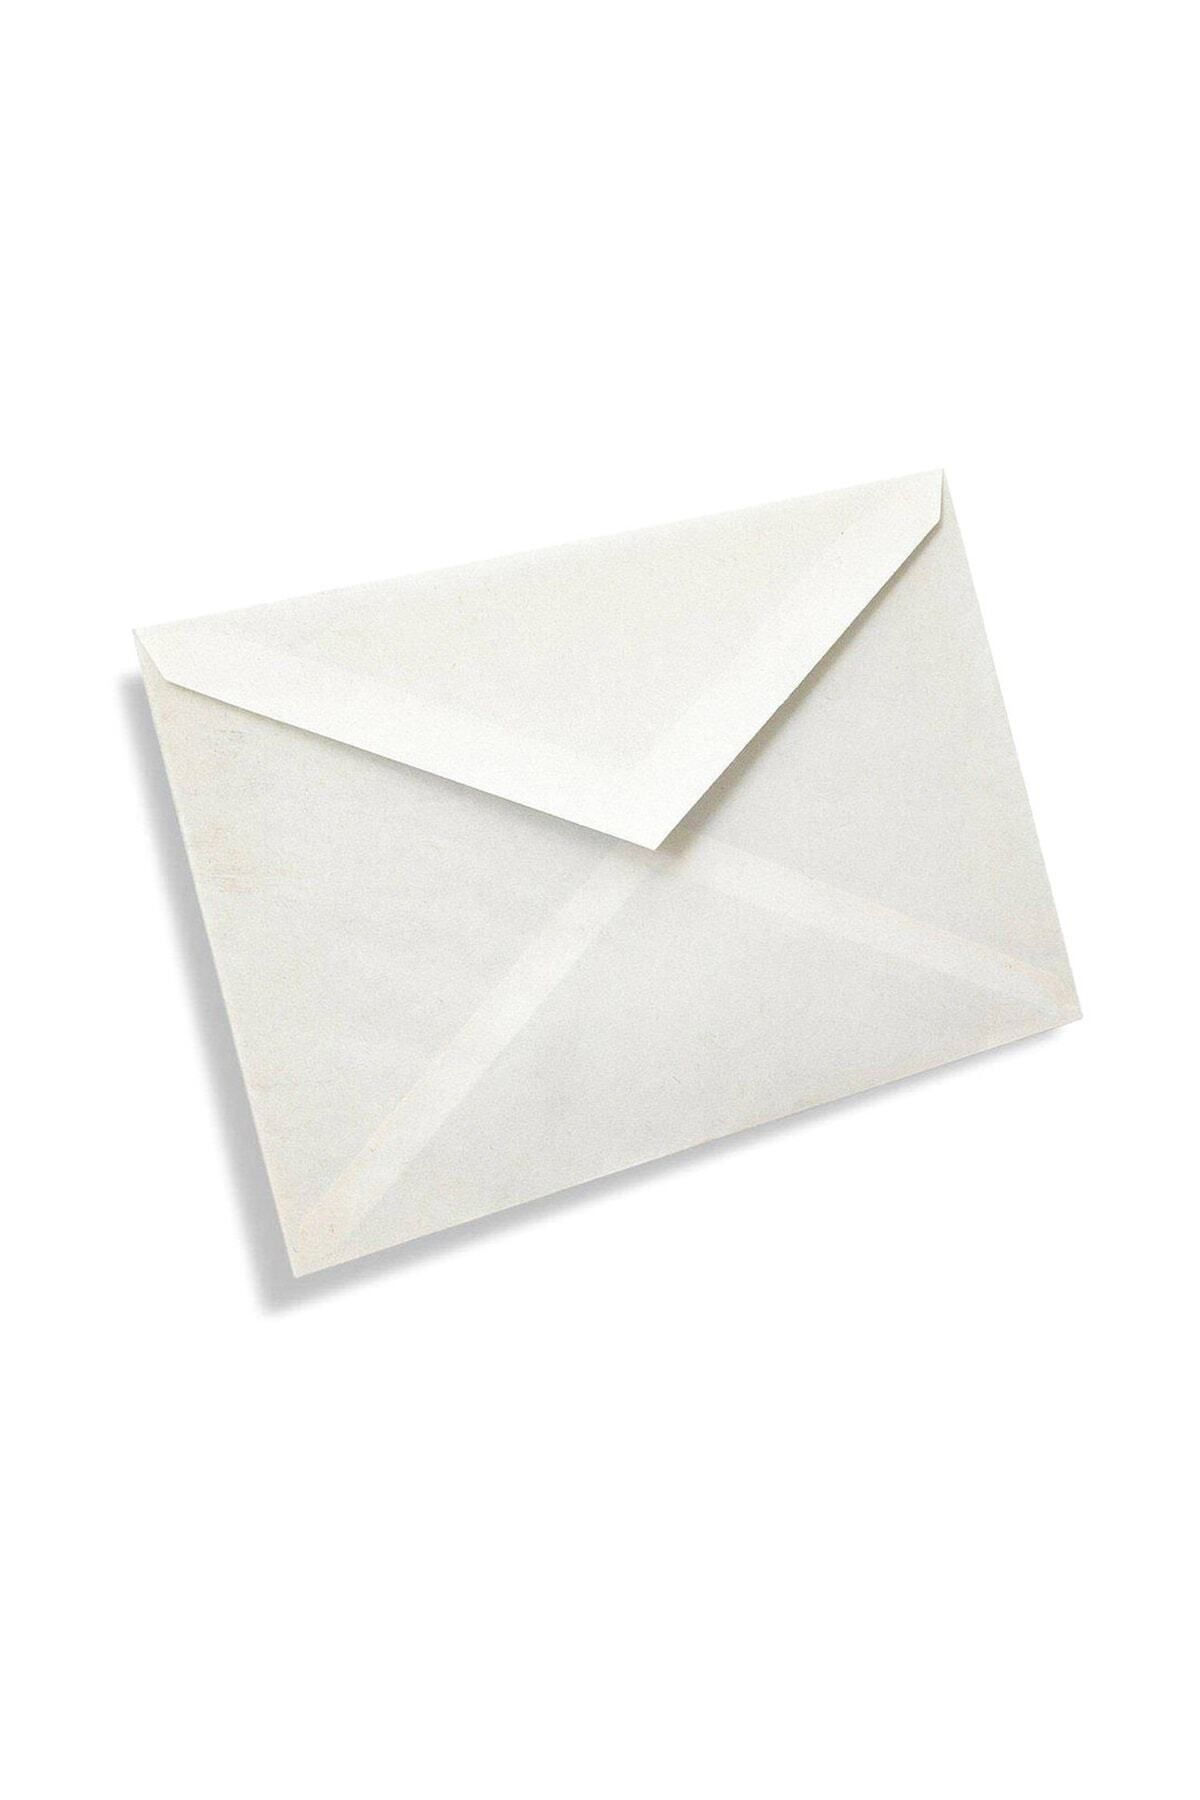 Doğan Asil Mektup Zarfı 114x162 Mm 70 gr (1 PAKET 500 ADET)